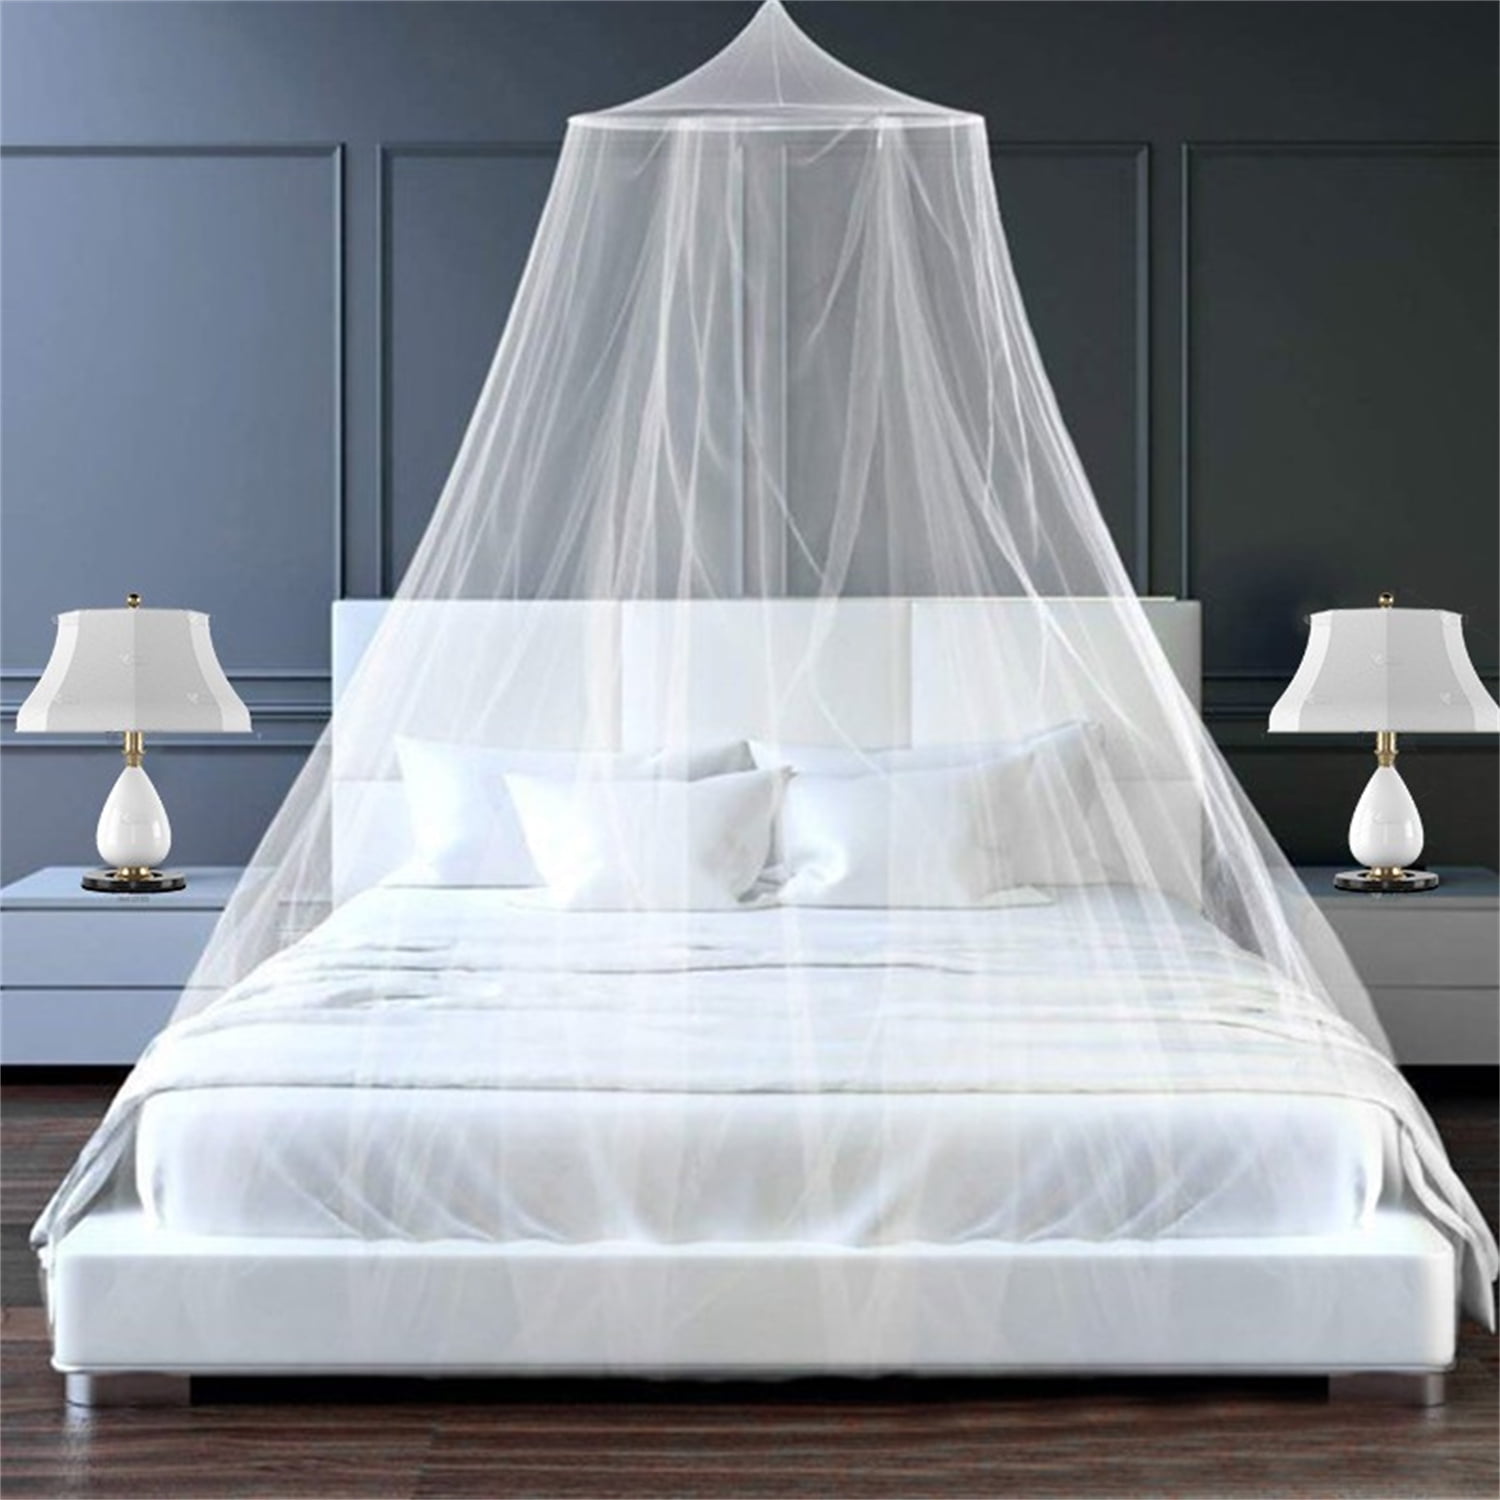 White Dome Mosquito Mesh Net Hammocks Cribs Canopy Hanging Netting Curtain D6V0 